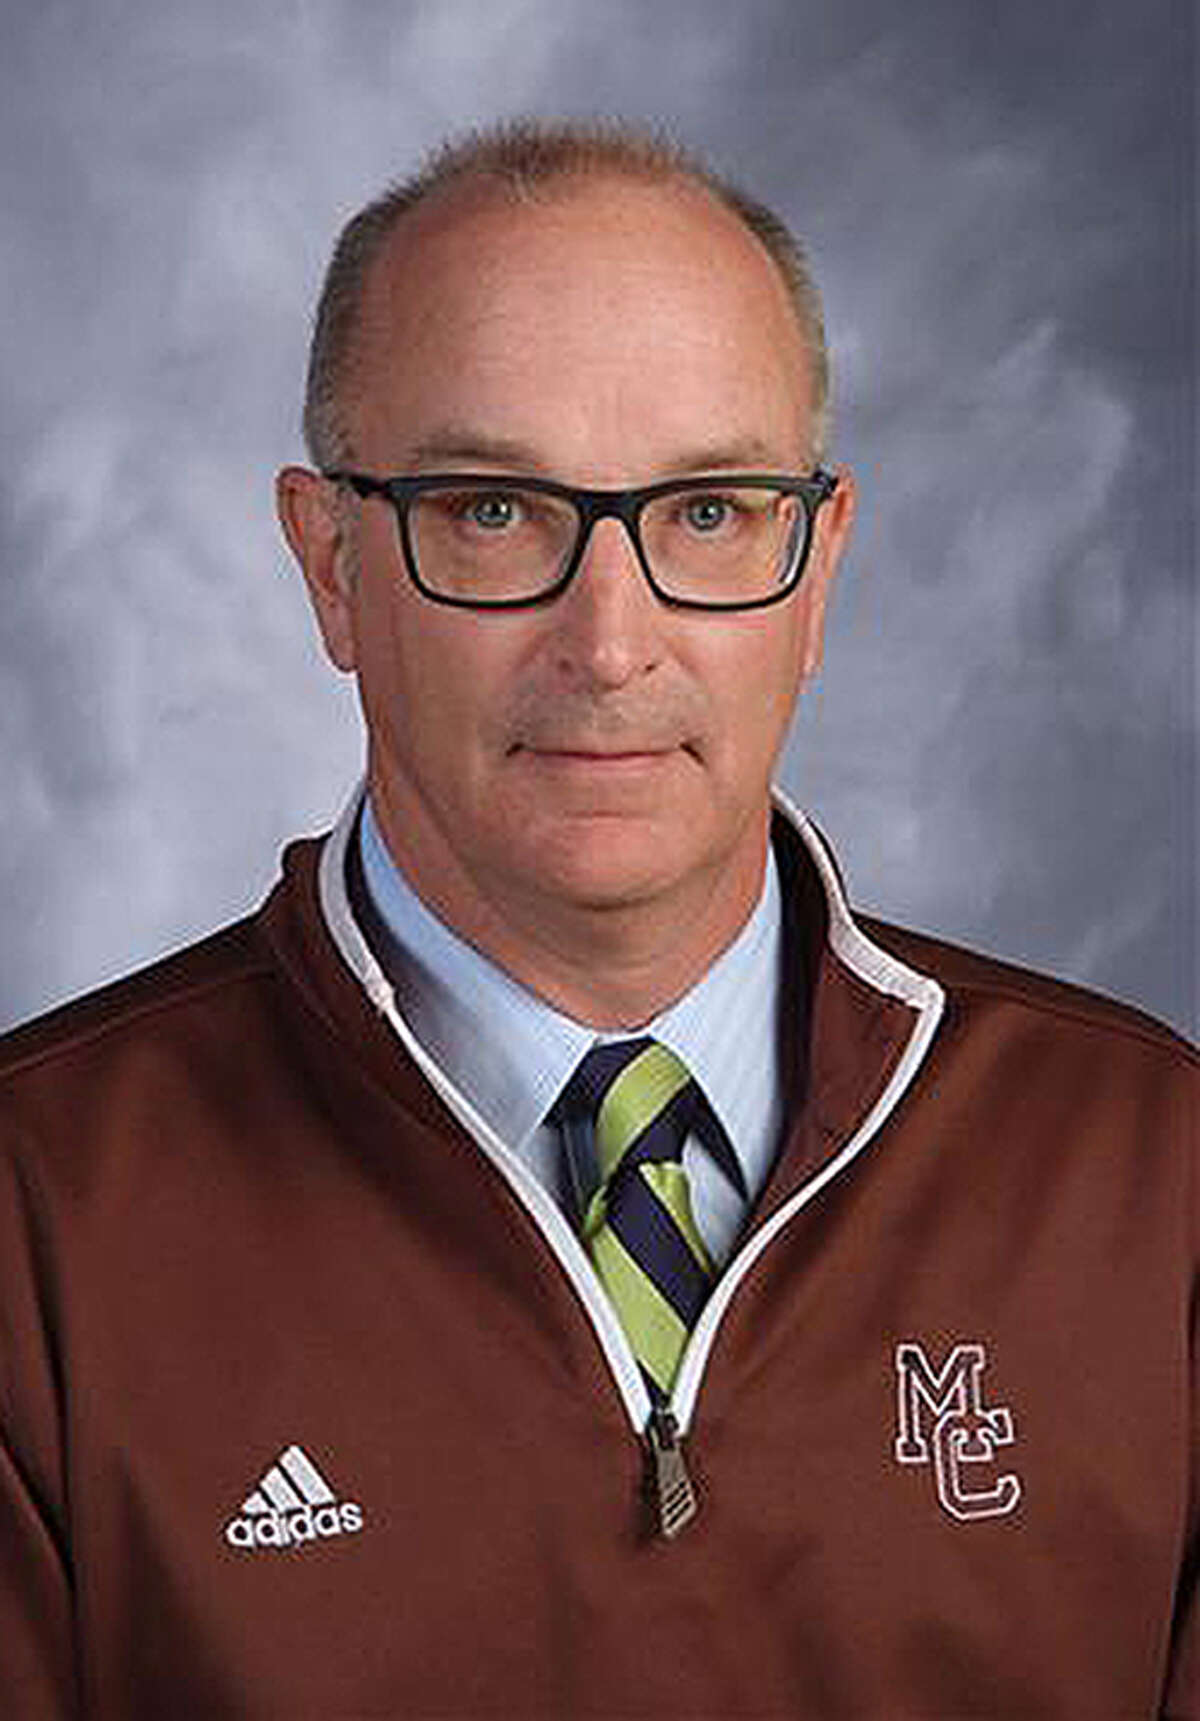 Mount Carmel High School athletic director Dan LaCount.